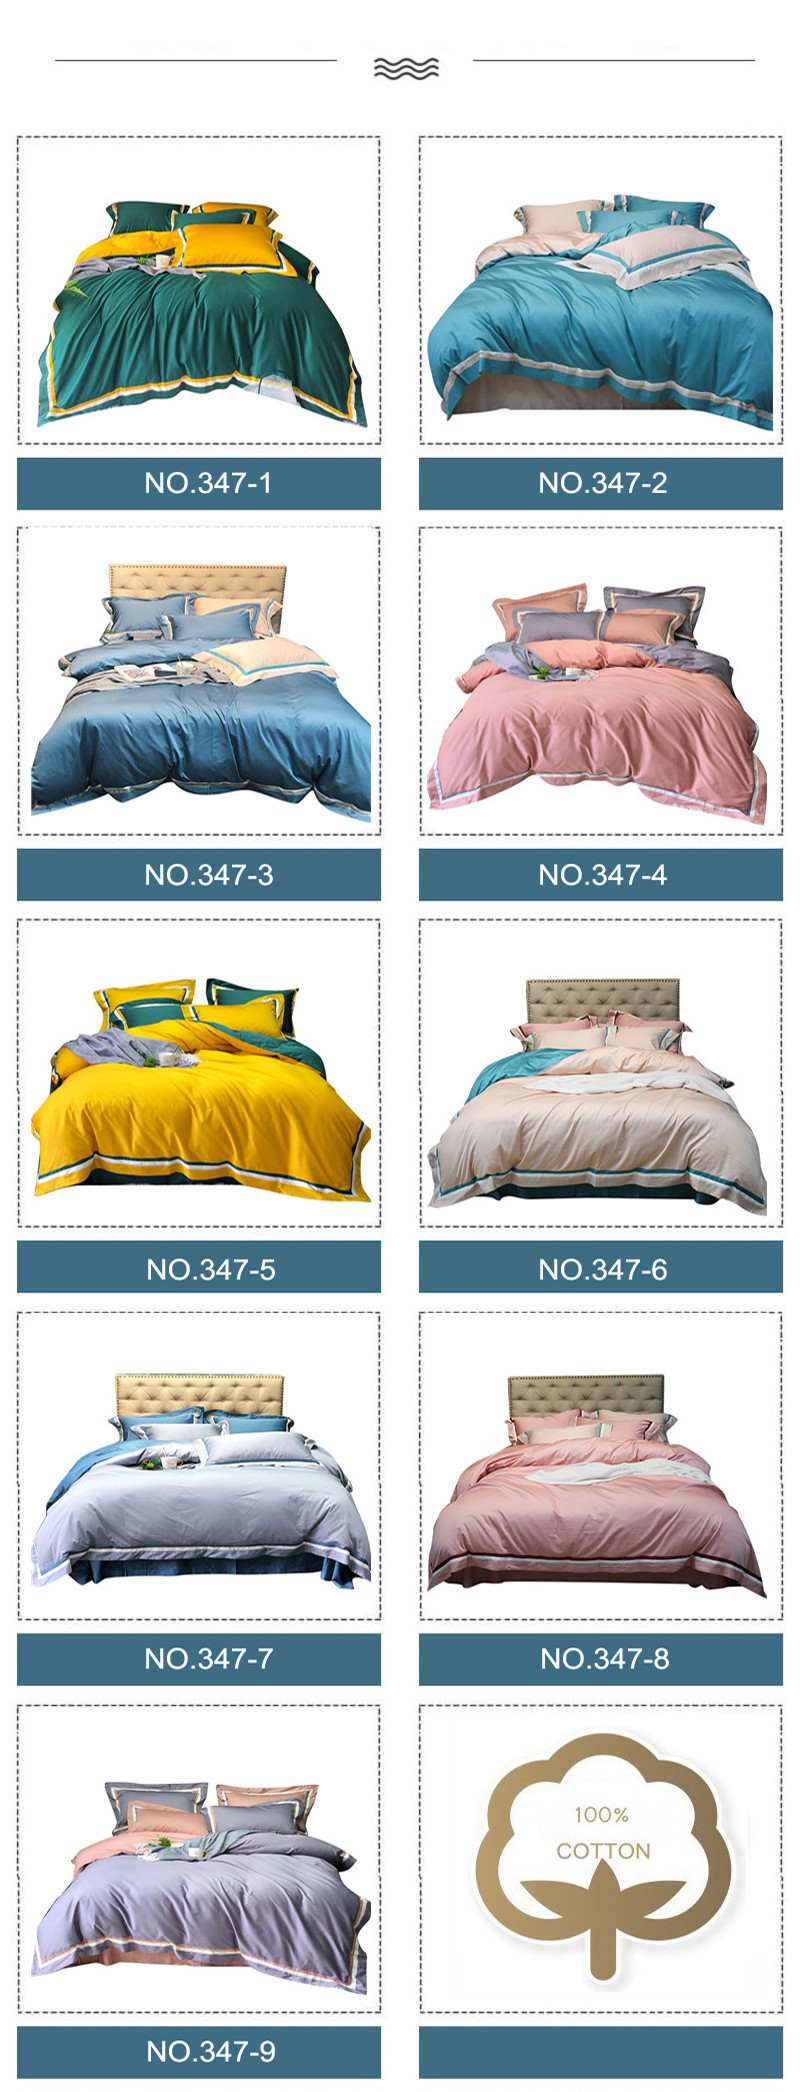 Bedding 100% Long Staple Cotton Highest Quality